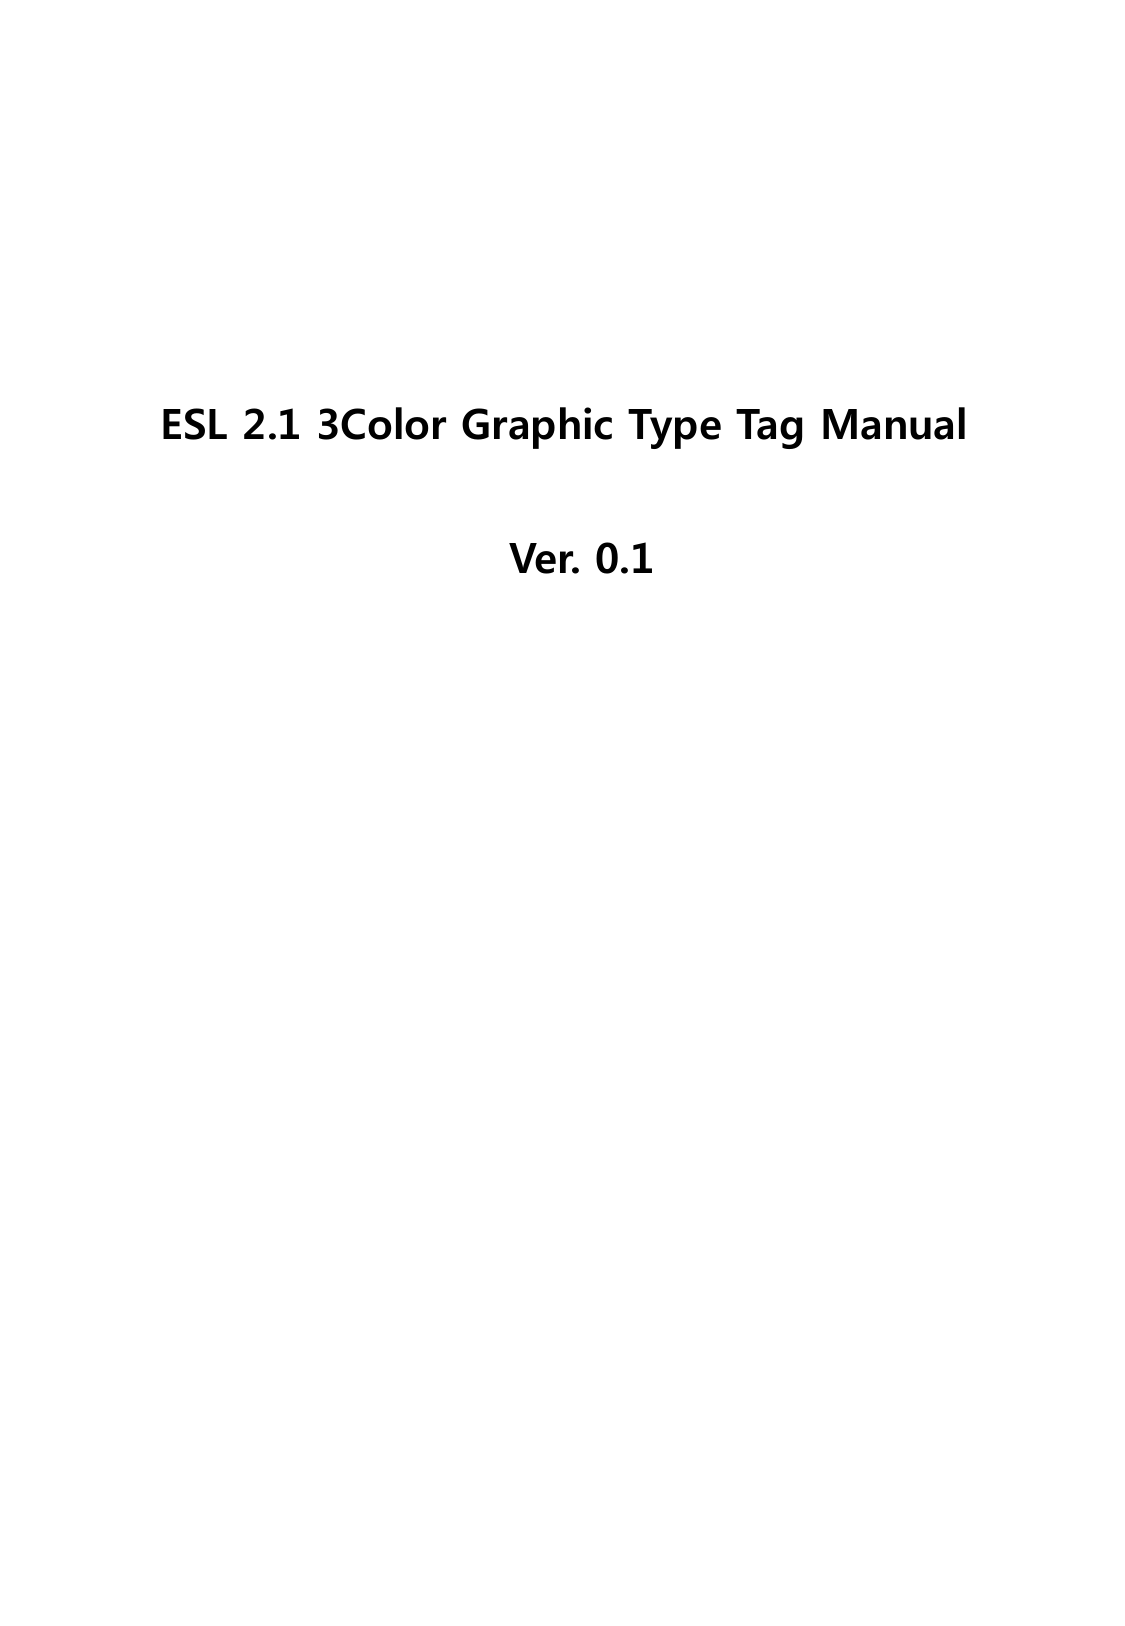 ESL 2.1 3Color Graphic Type Tag Manual Ver. 0.1 